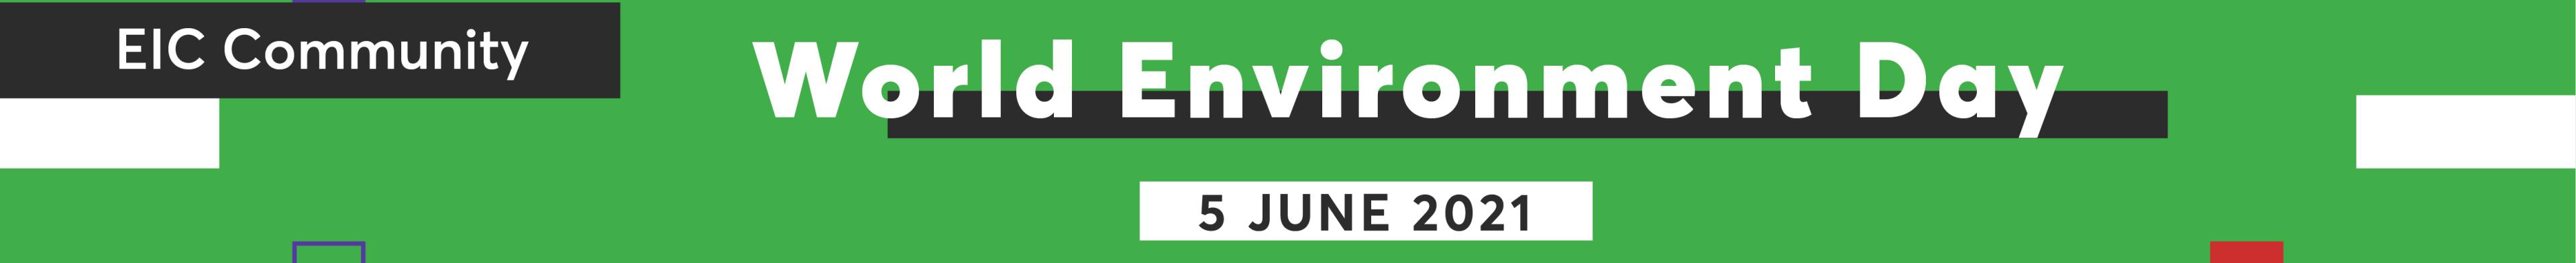 eic_world_environment_day_community_banner.jpg